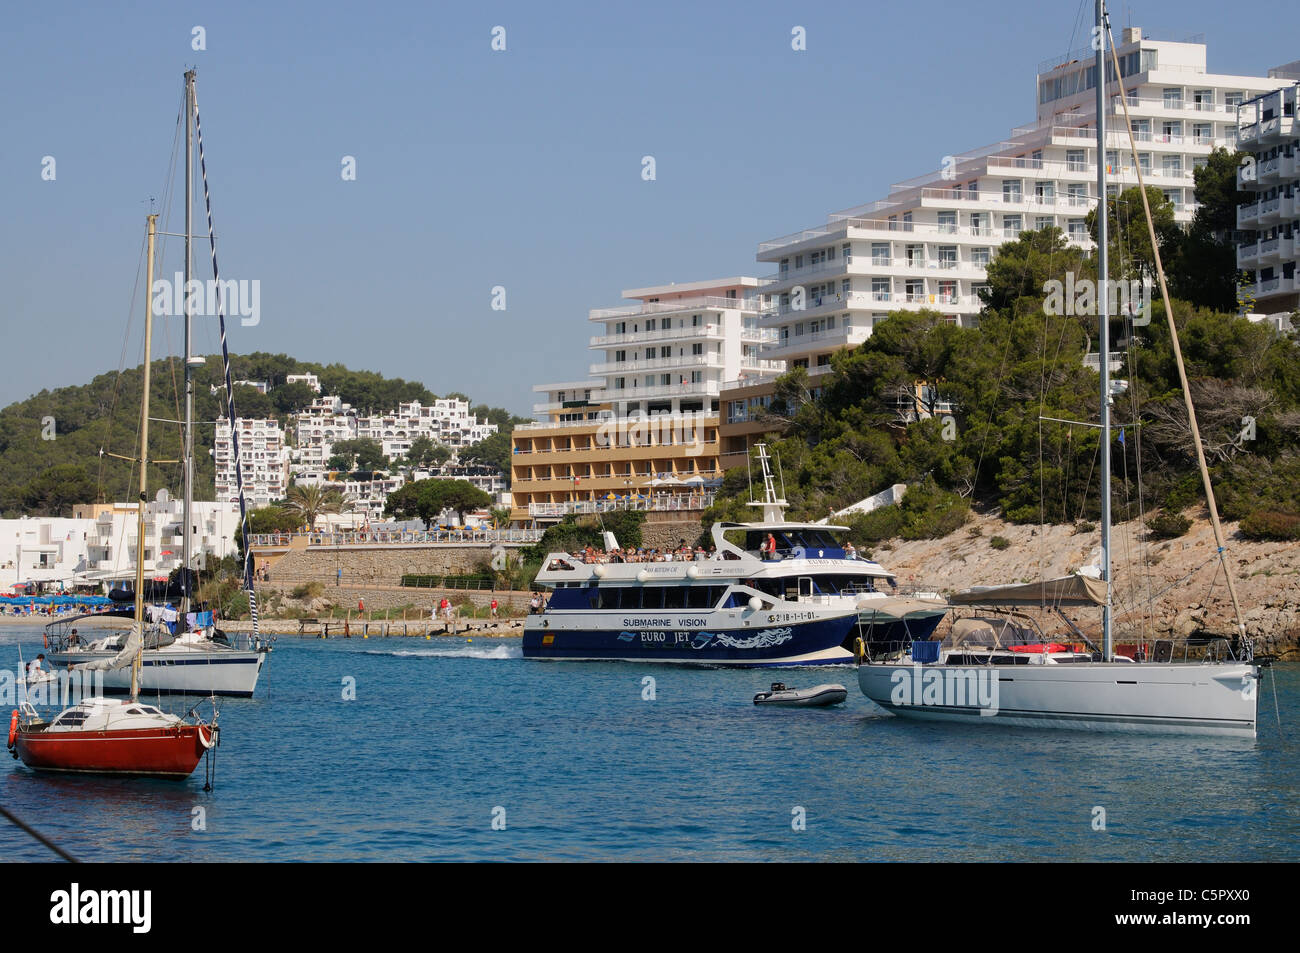 Boats moored in the inlet of Spanish seaside resort of Cala Llonga on Ibiza island Stock Photo